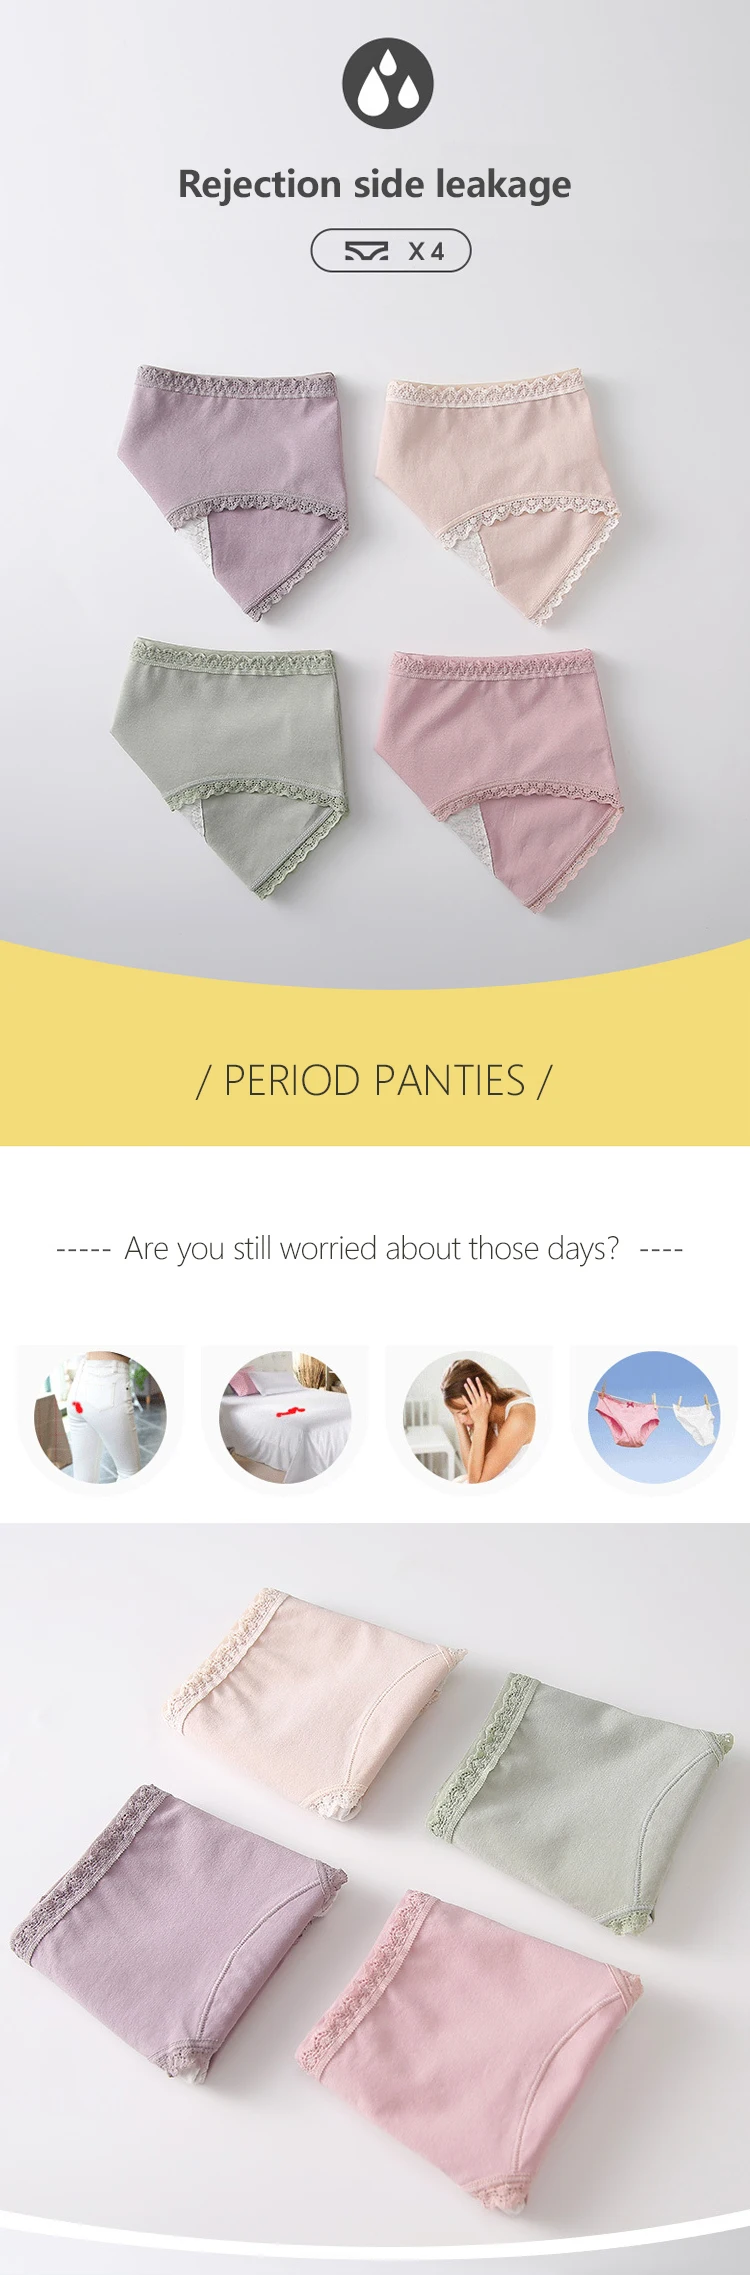 Enerup Langer Calcinhas E Sutias Leakproof Female Culotte Femme Women's Underwear Ladies Menstrual Period Panties